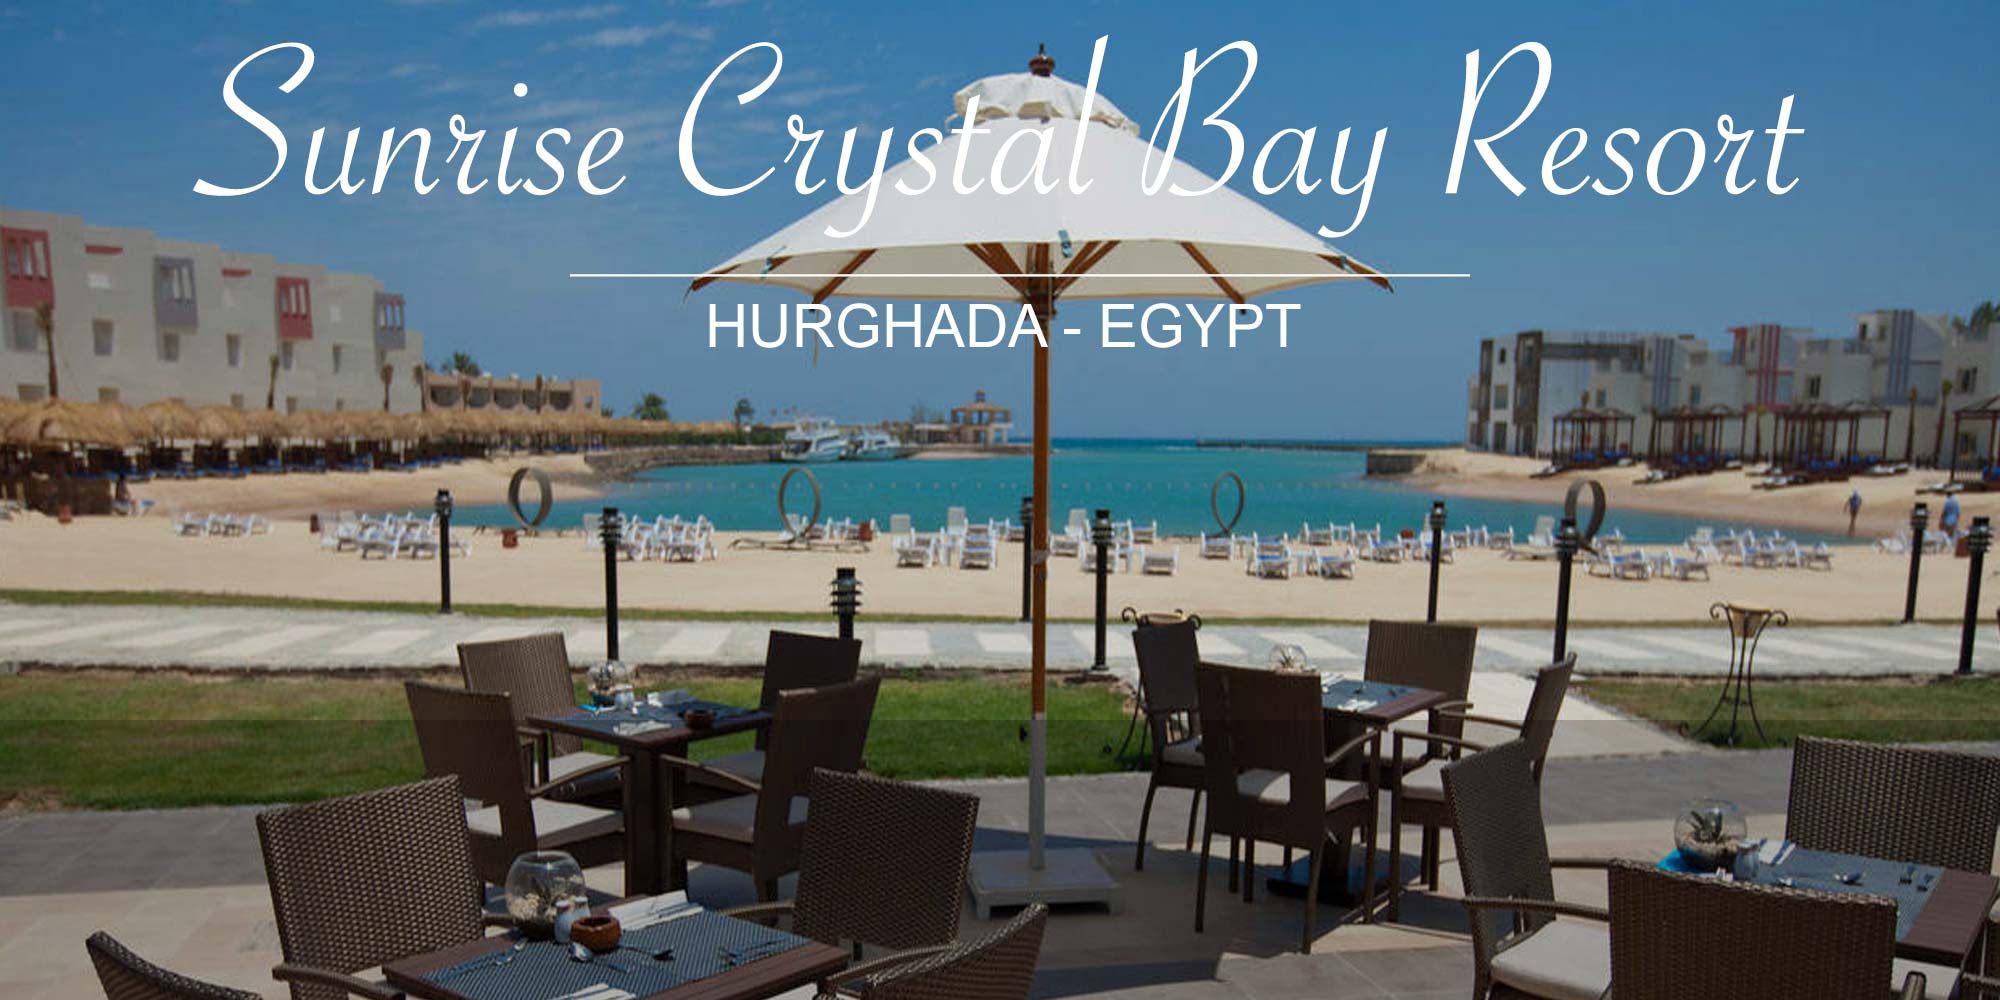 sunrise crystal bay resort hurghada